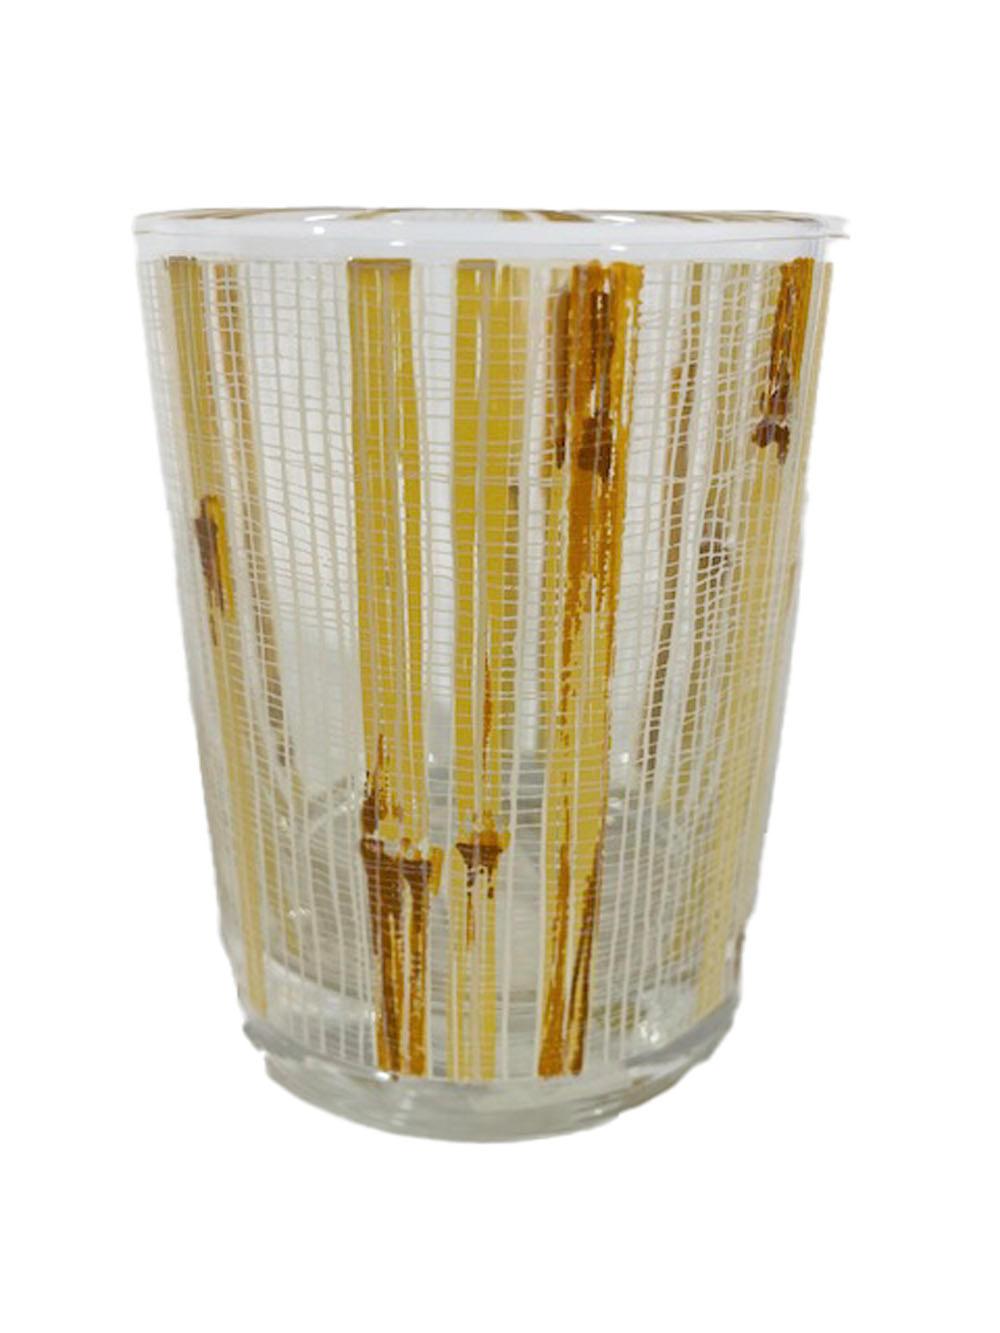 20th Century Vintage Cera Glassware for Neiman-Marcus Rocks Glasses in a Bamboo Design